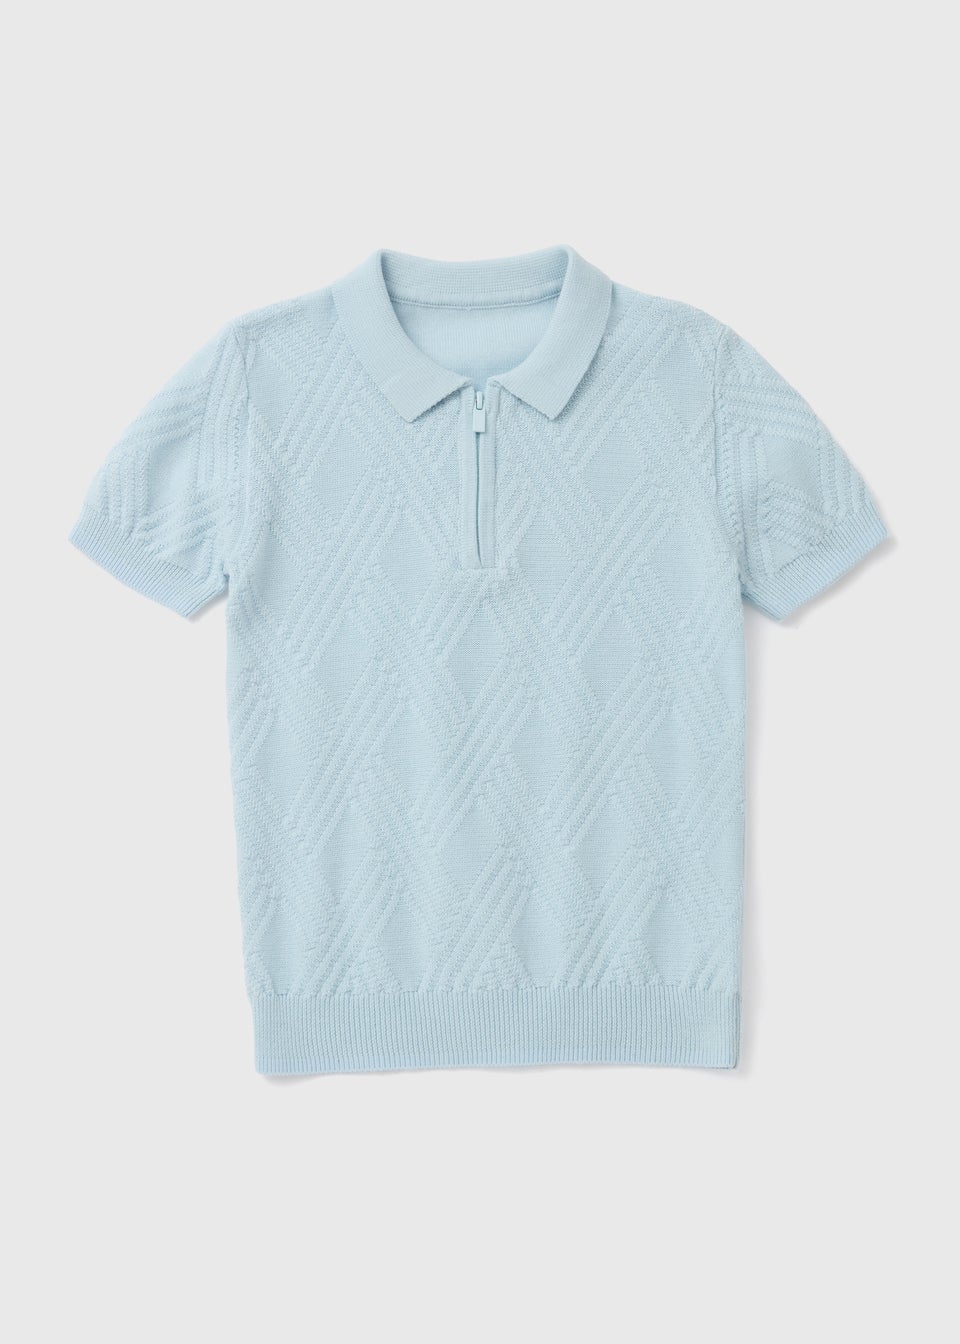 Boys Polo Shirts | Long & Short Sleeve Polo Tops - Matalan